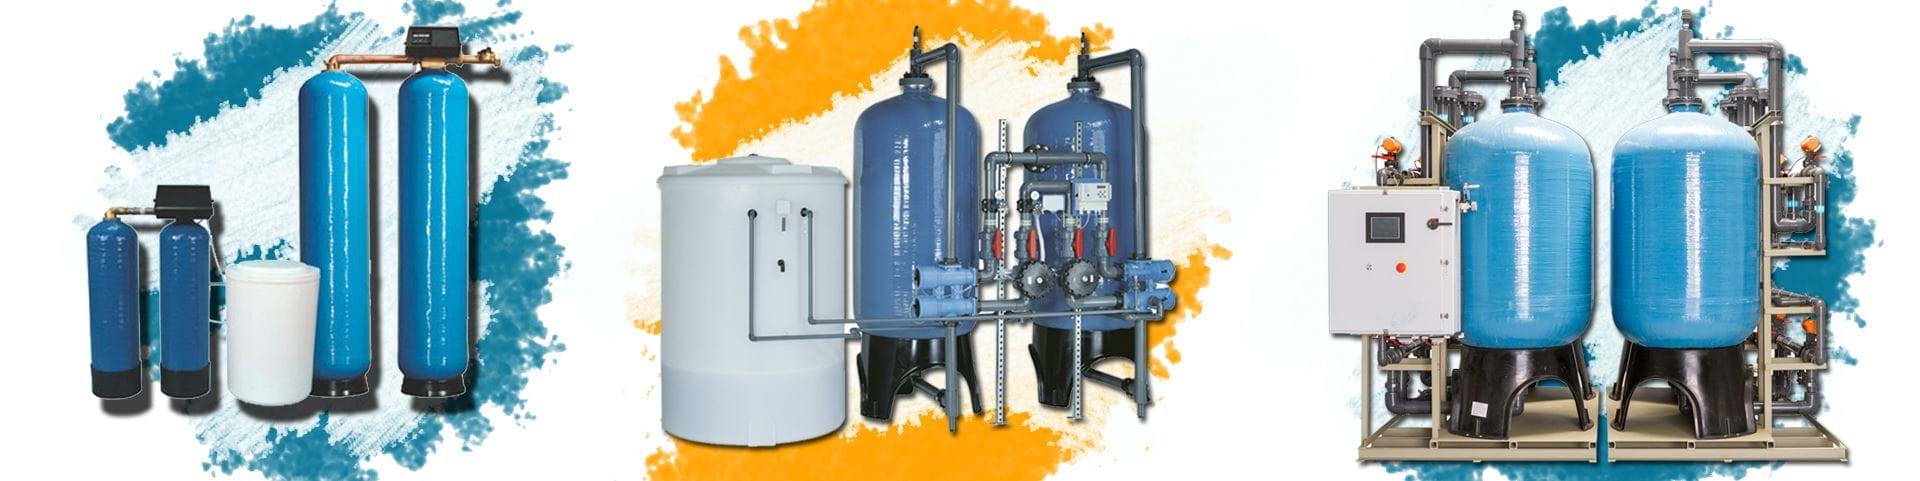 industrial water softeners